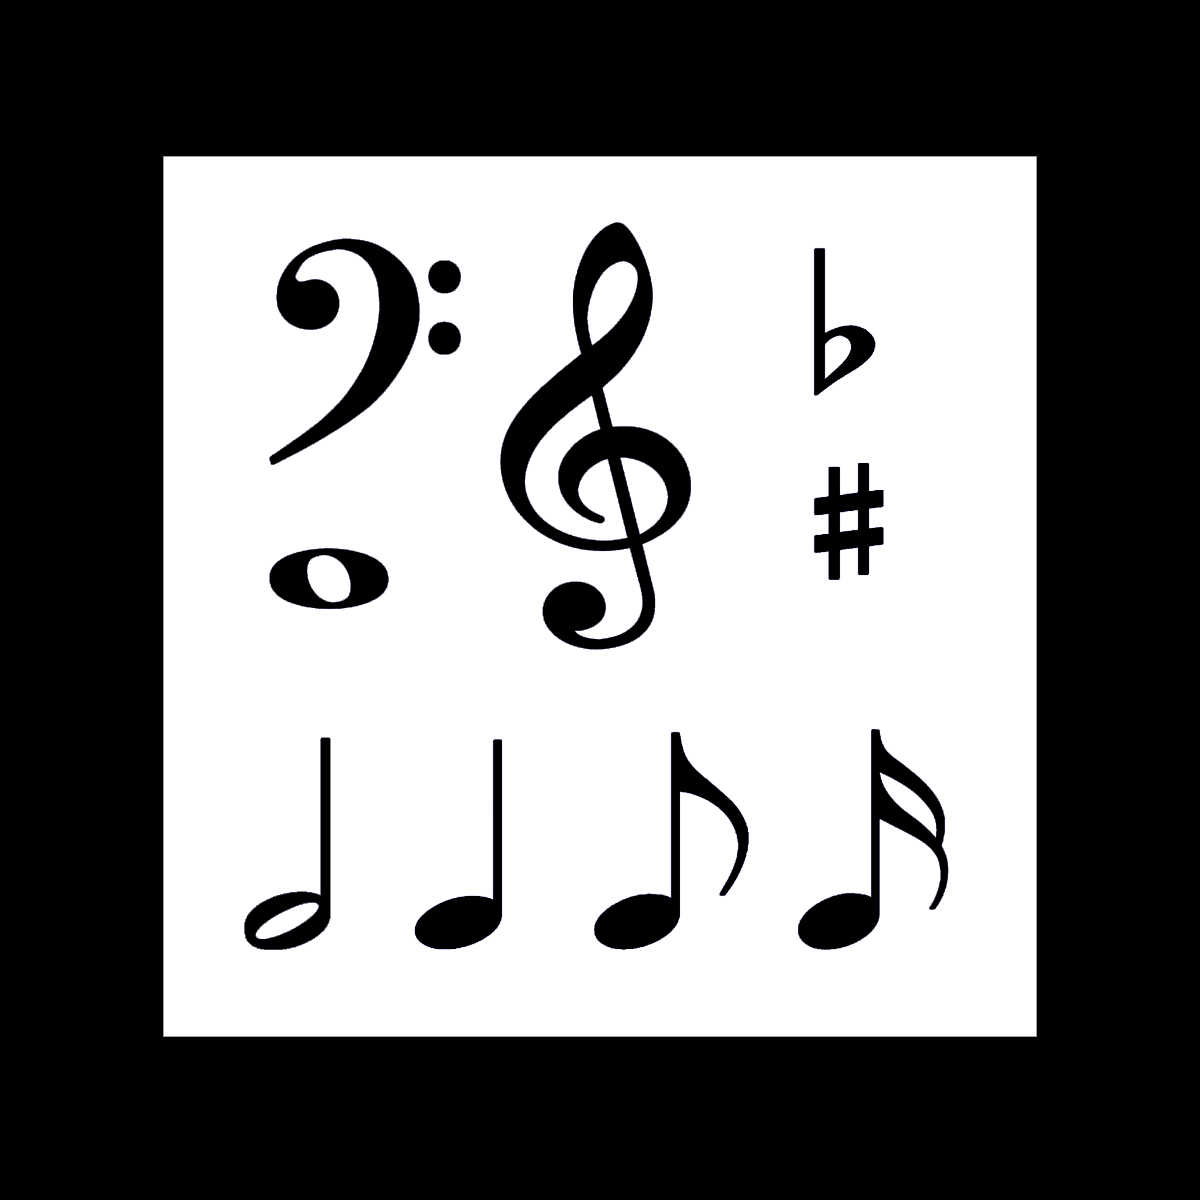 Free Clip Art - Music Notes & Symbols